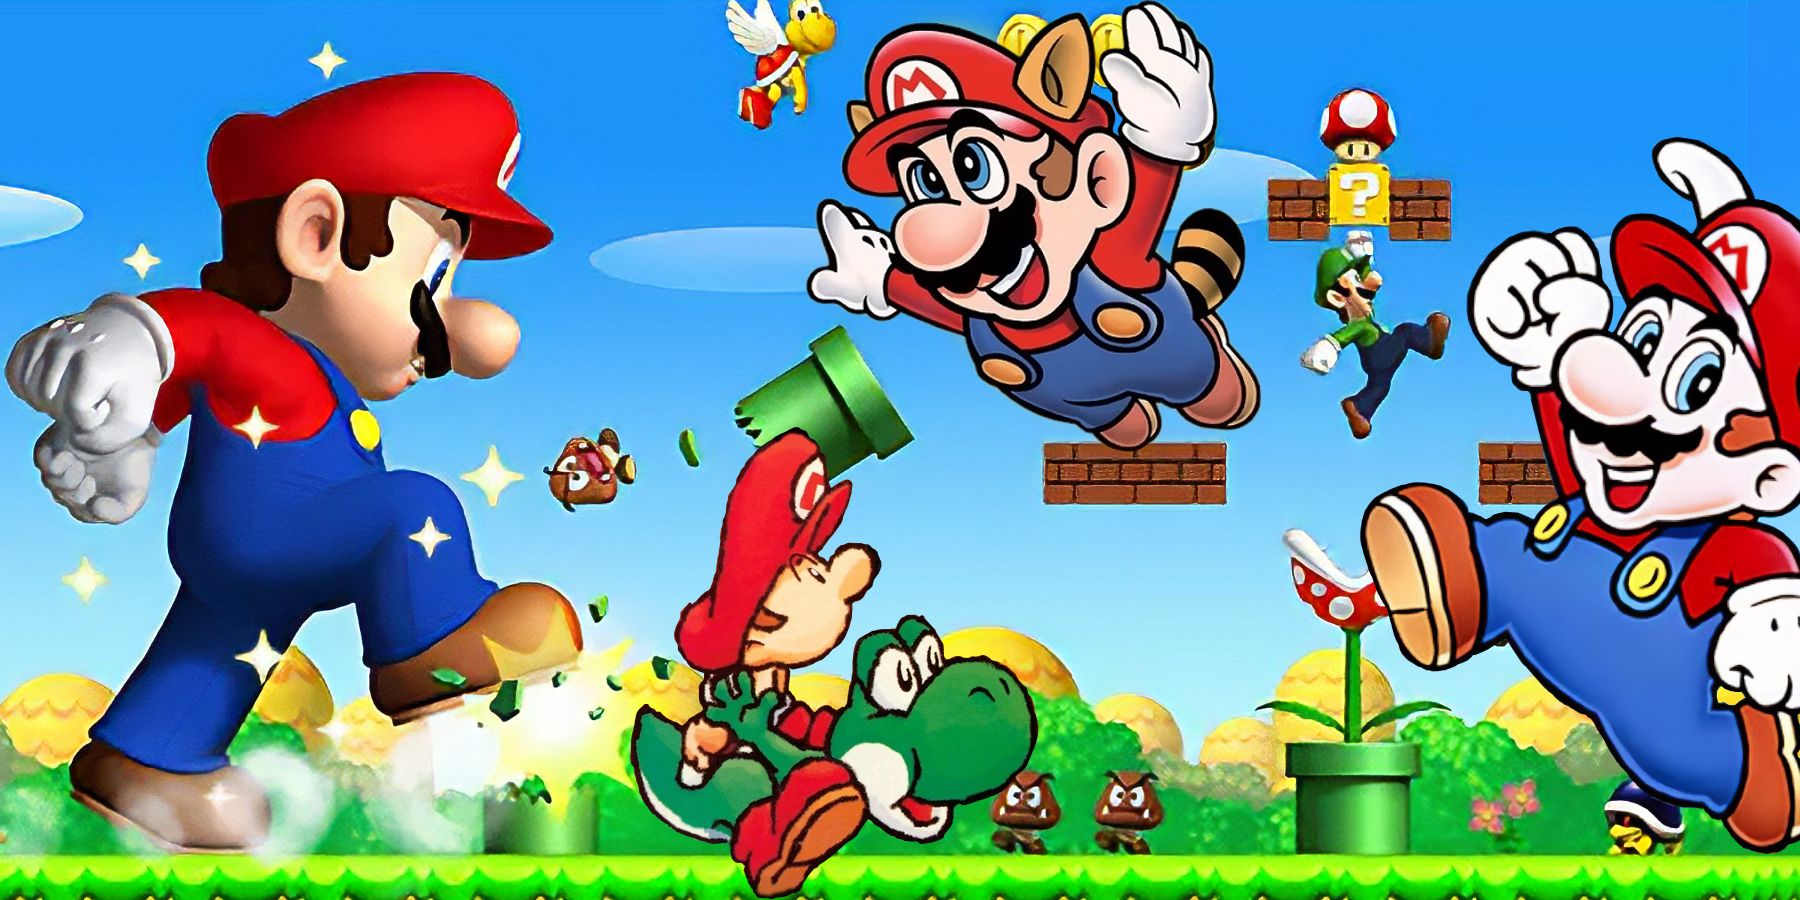 Super Mario 'Wonder,' 'RPG' more: Best Super Mario Bros. games ranked